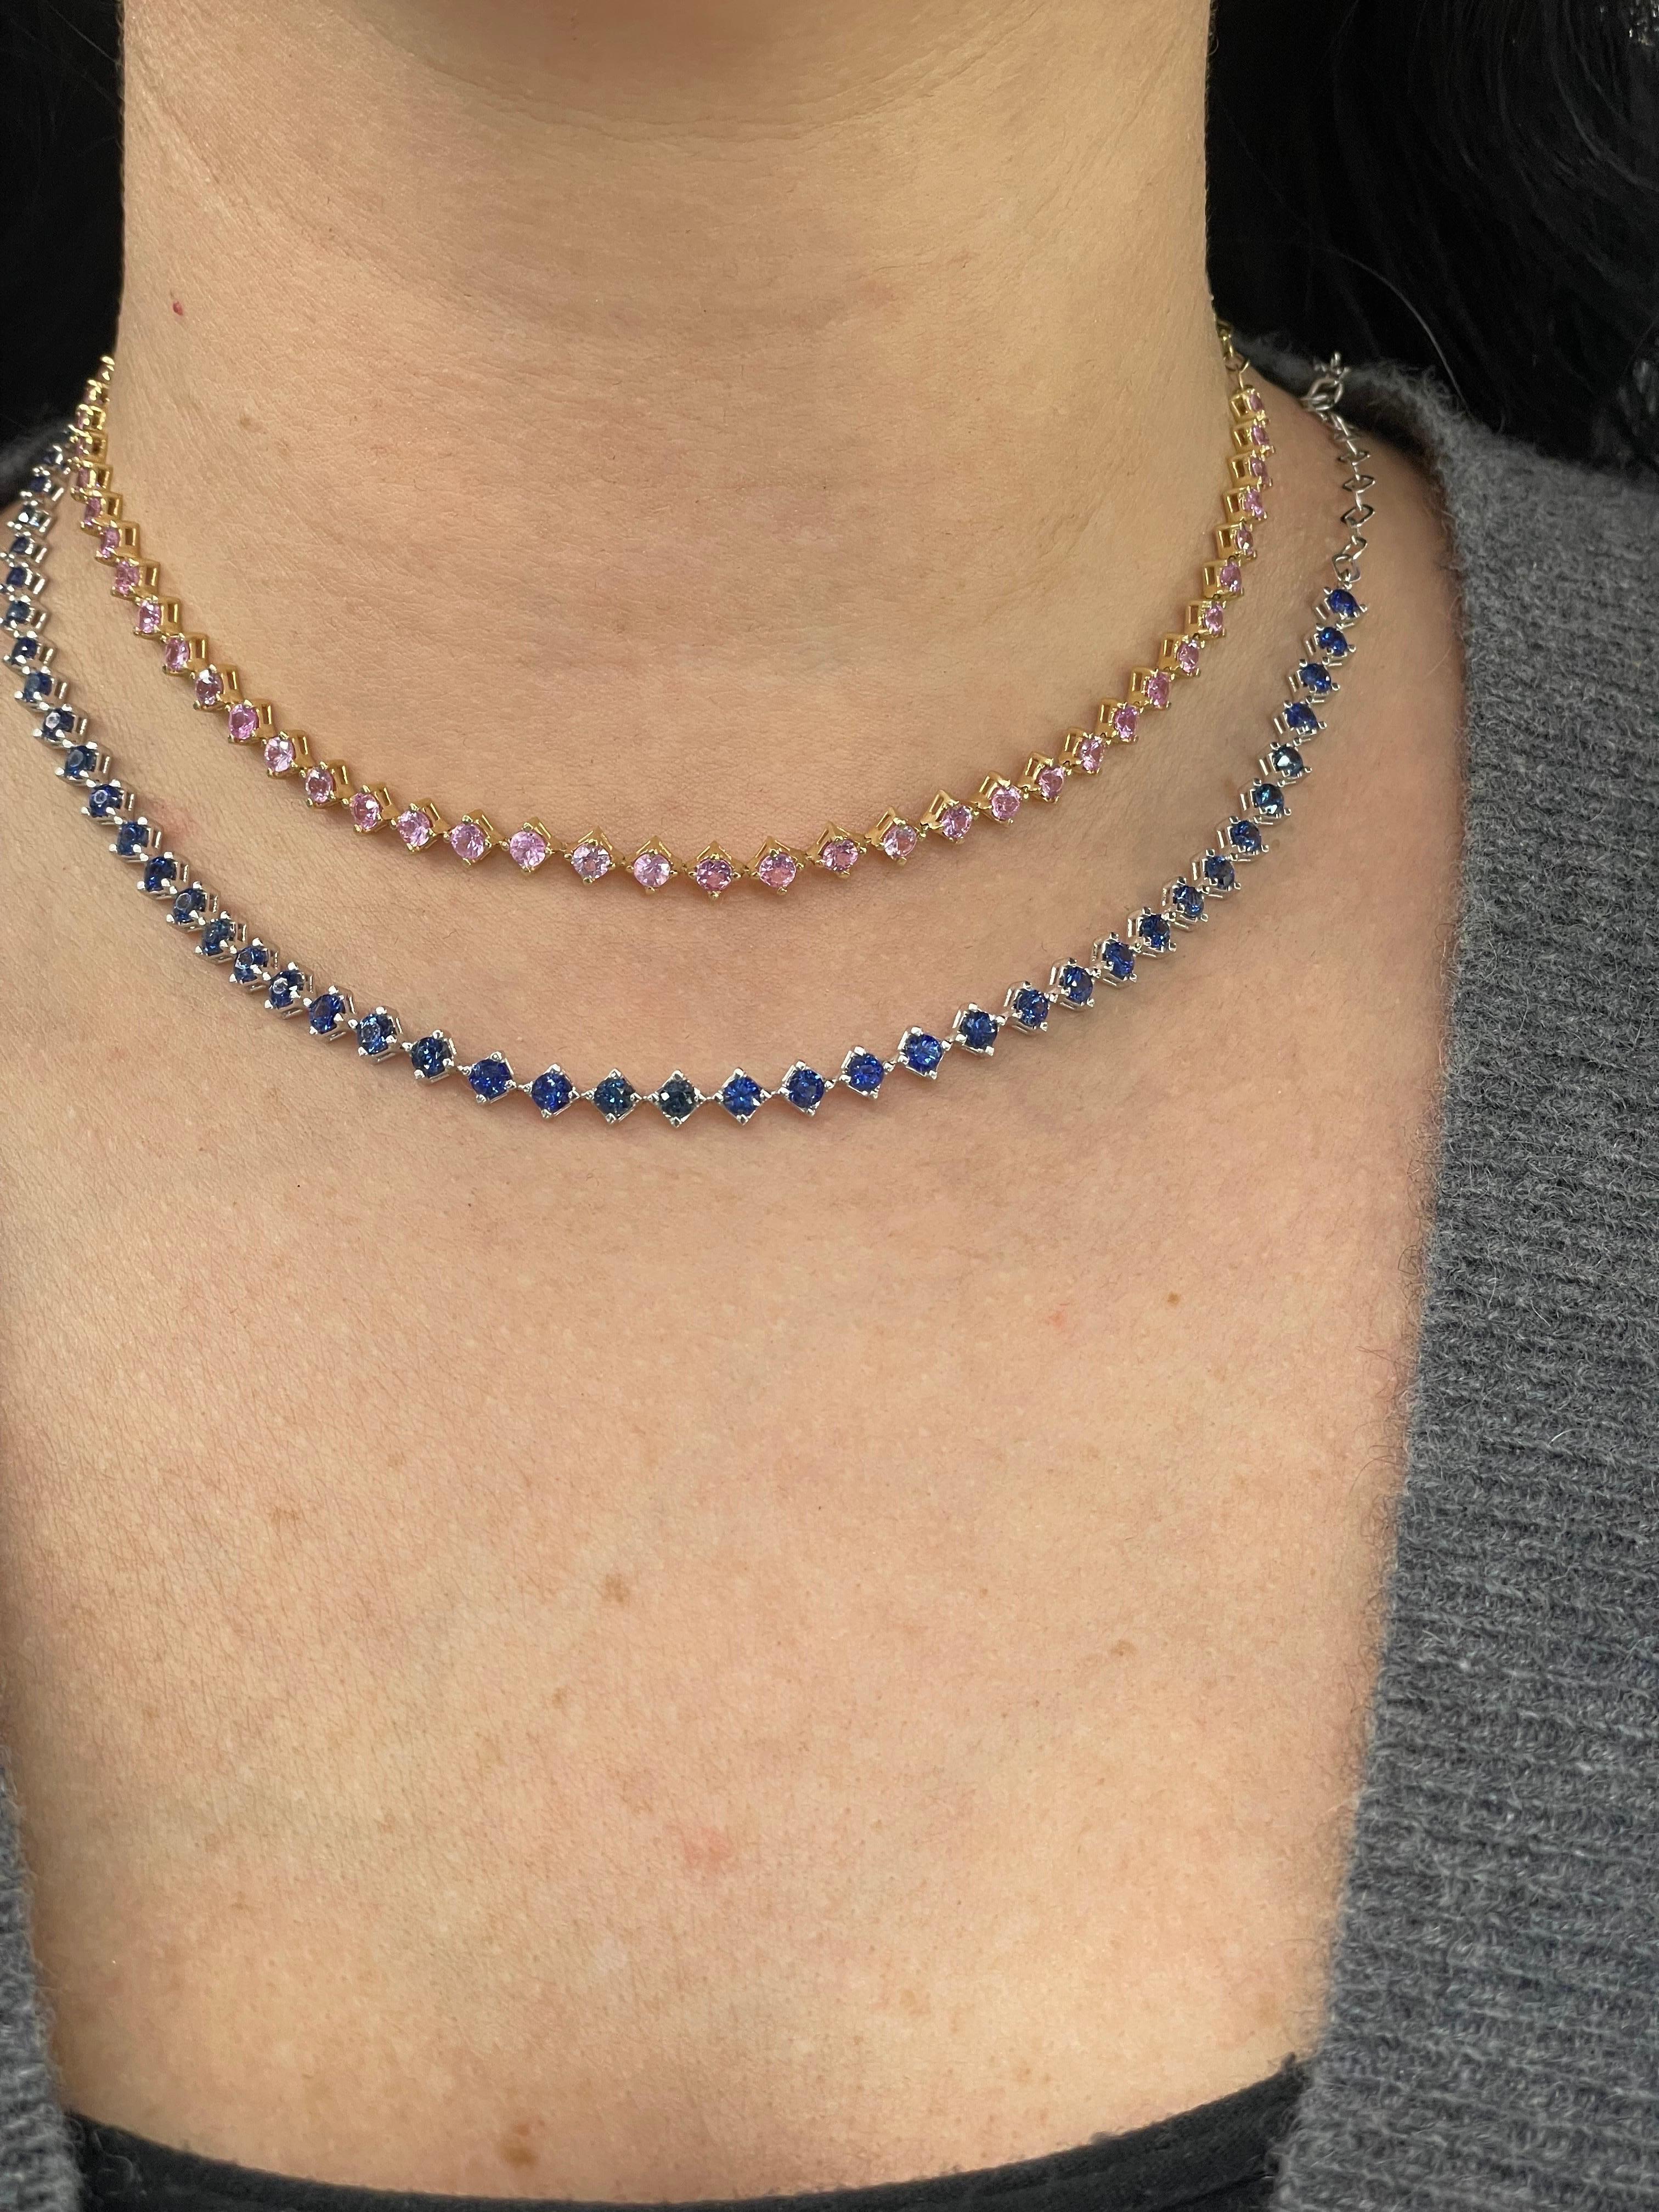 Blue Sapphire Choker Necklace & Bracelet 14 Karat White Gold 6.06 Carats 7